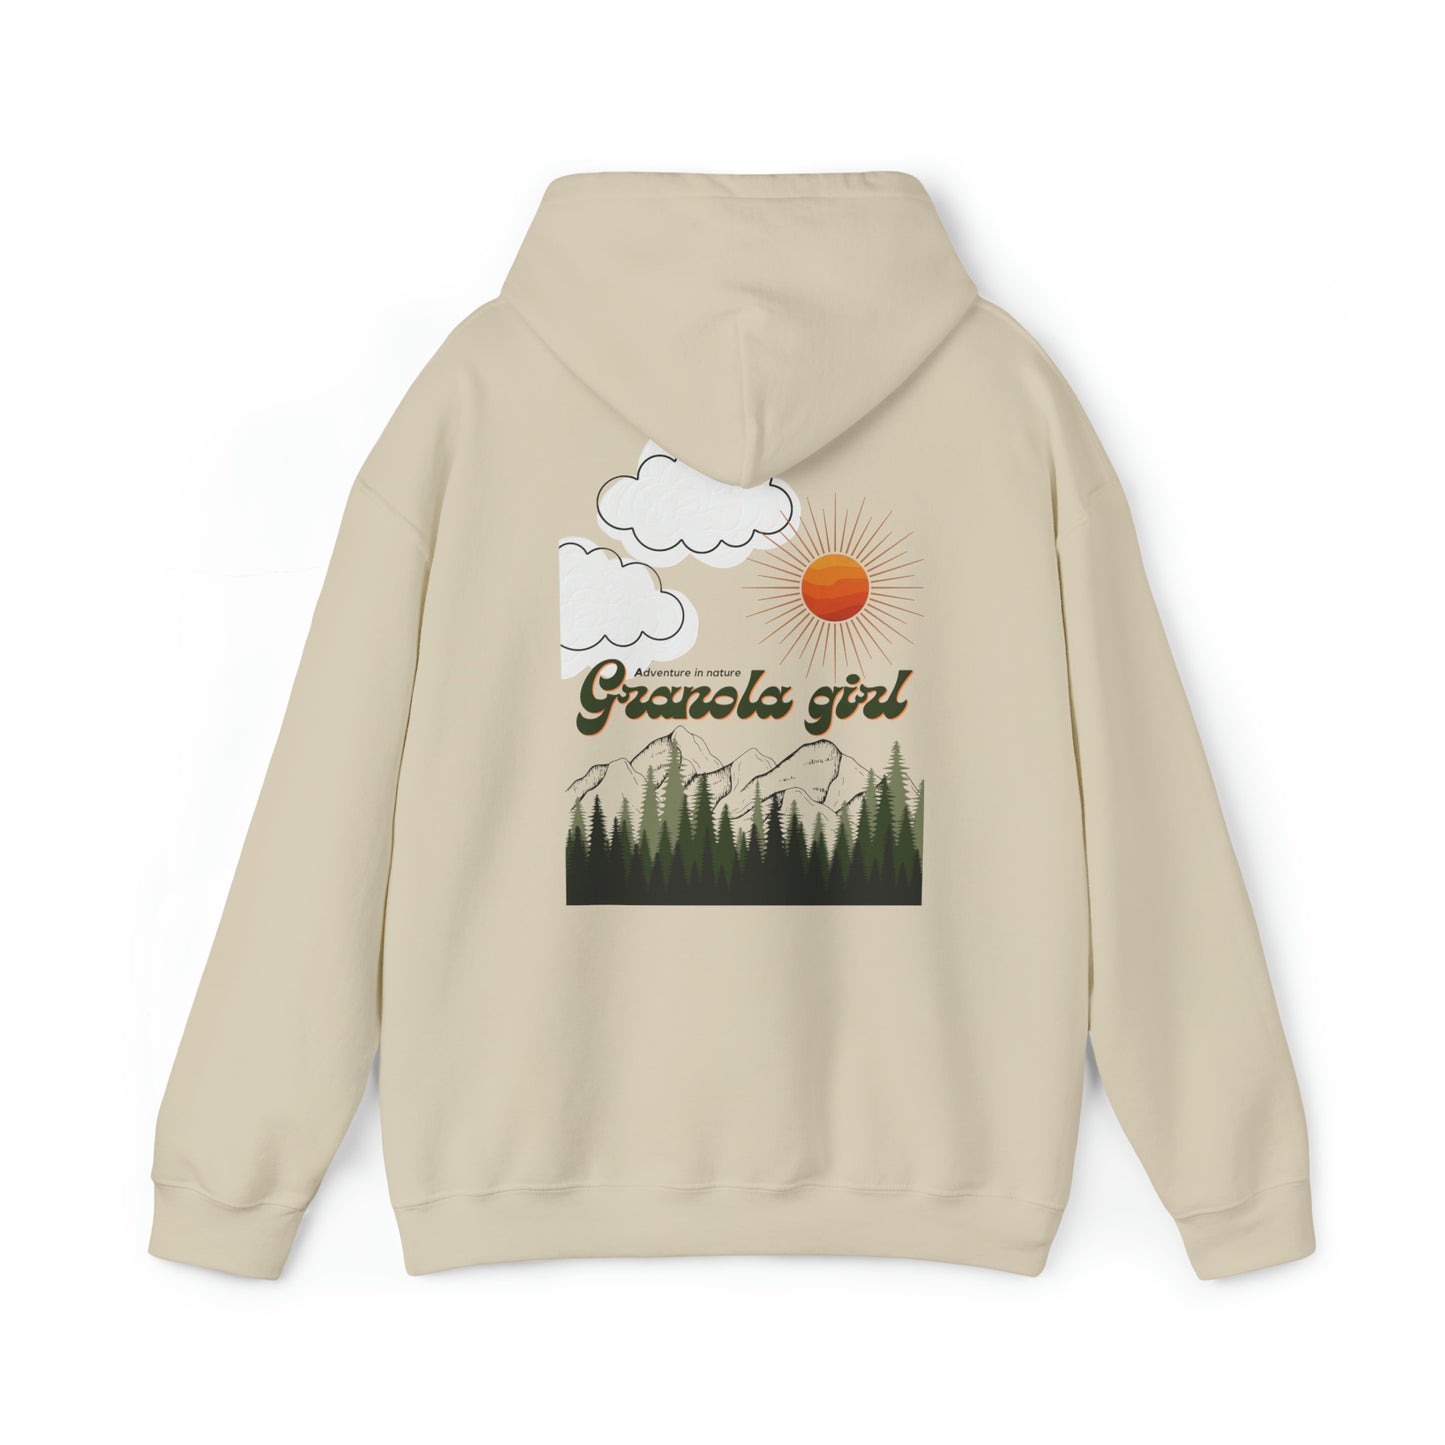 Granola girl hoodie